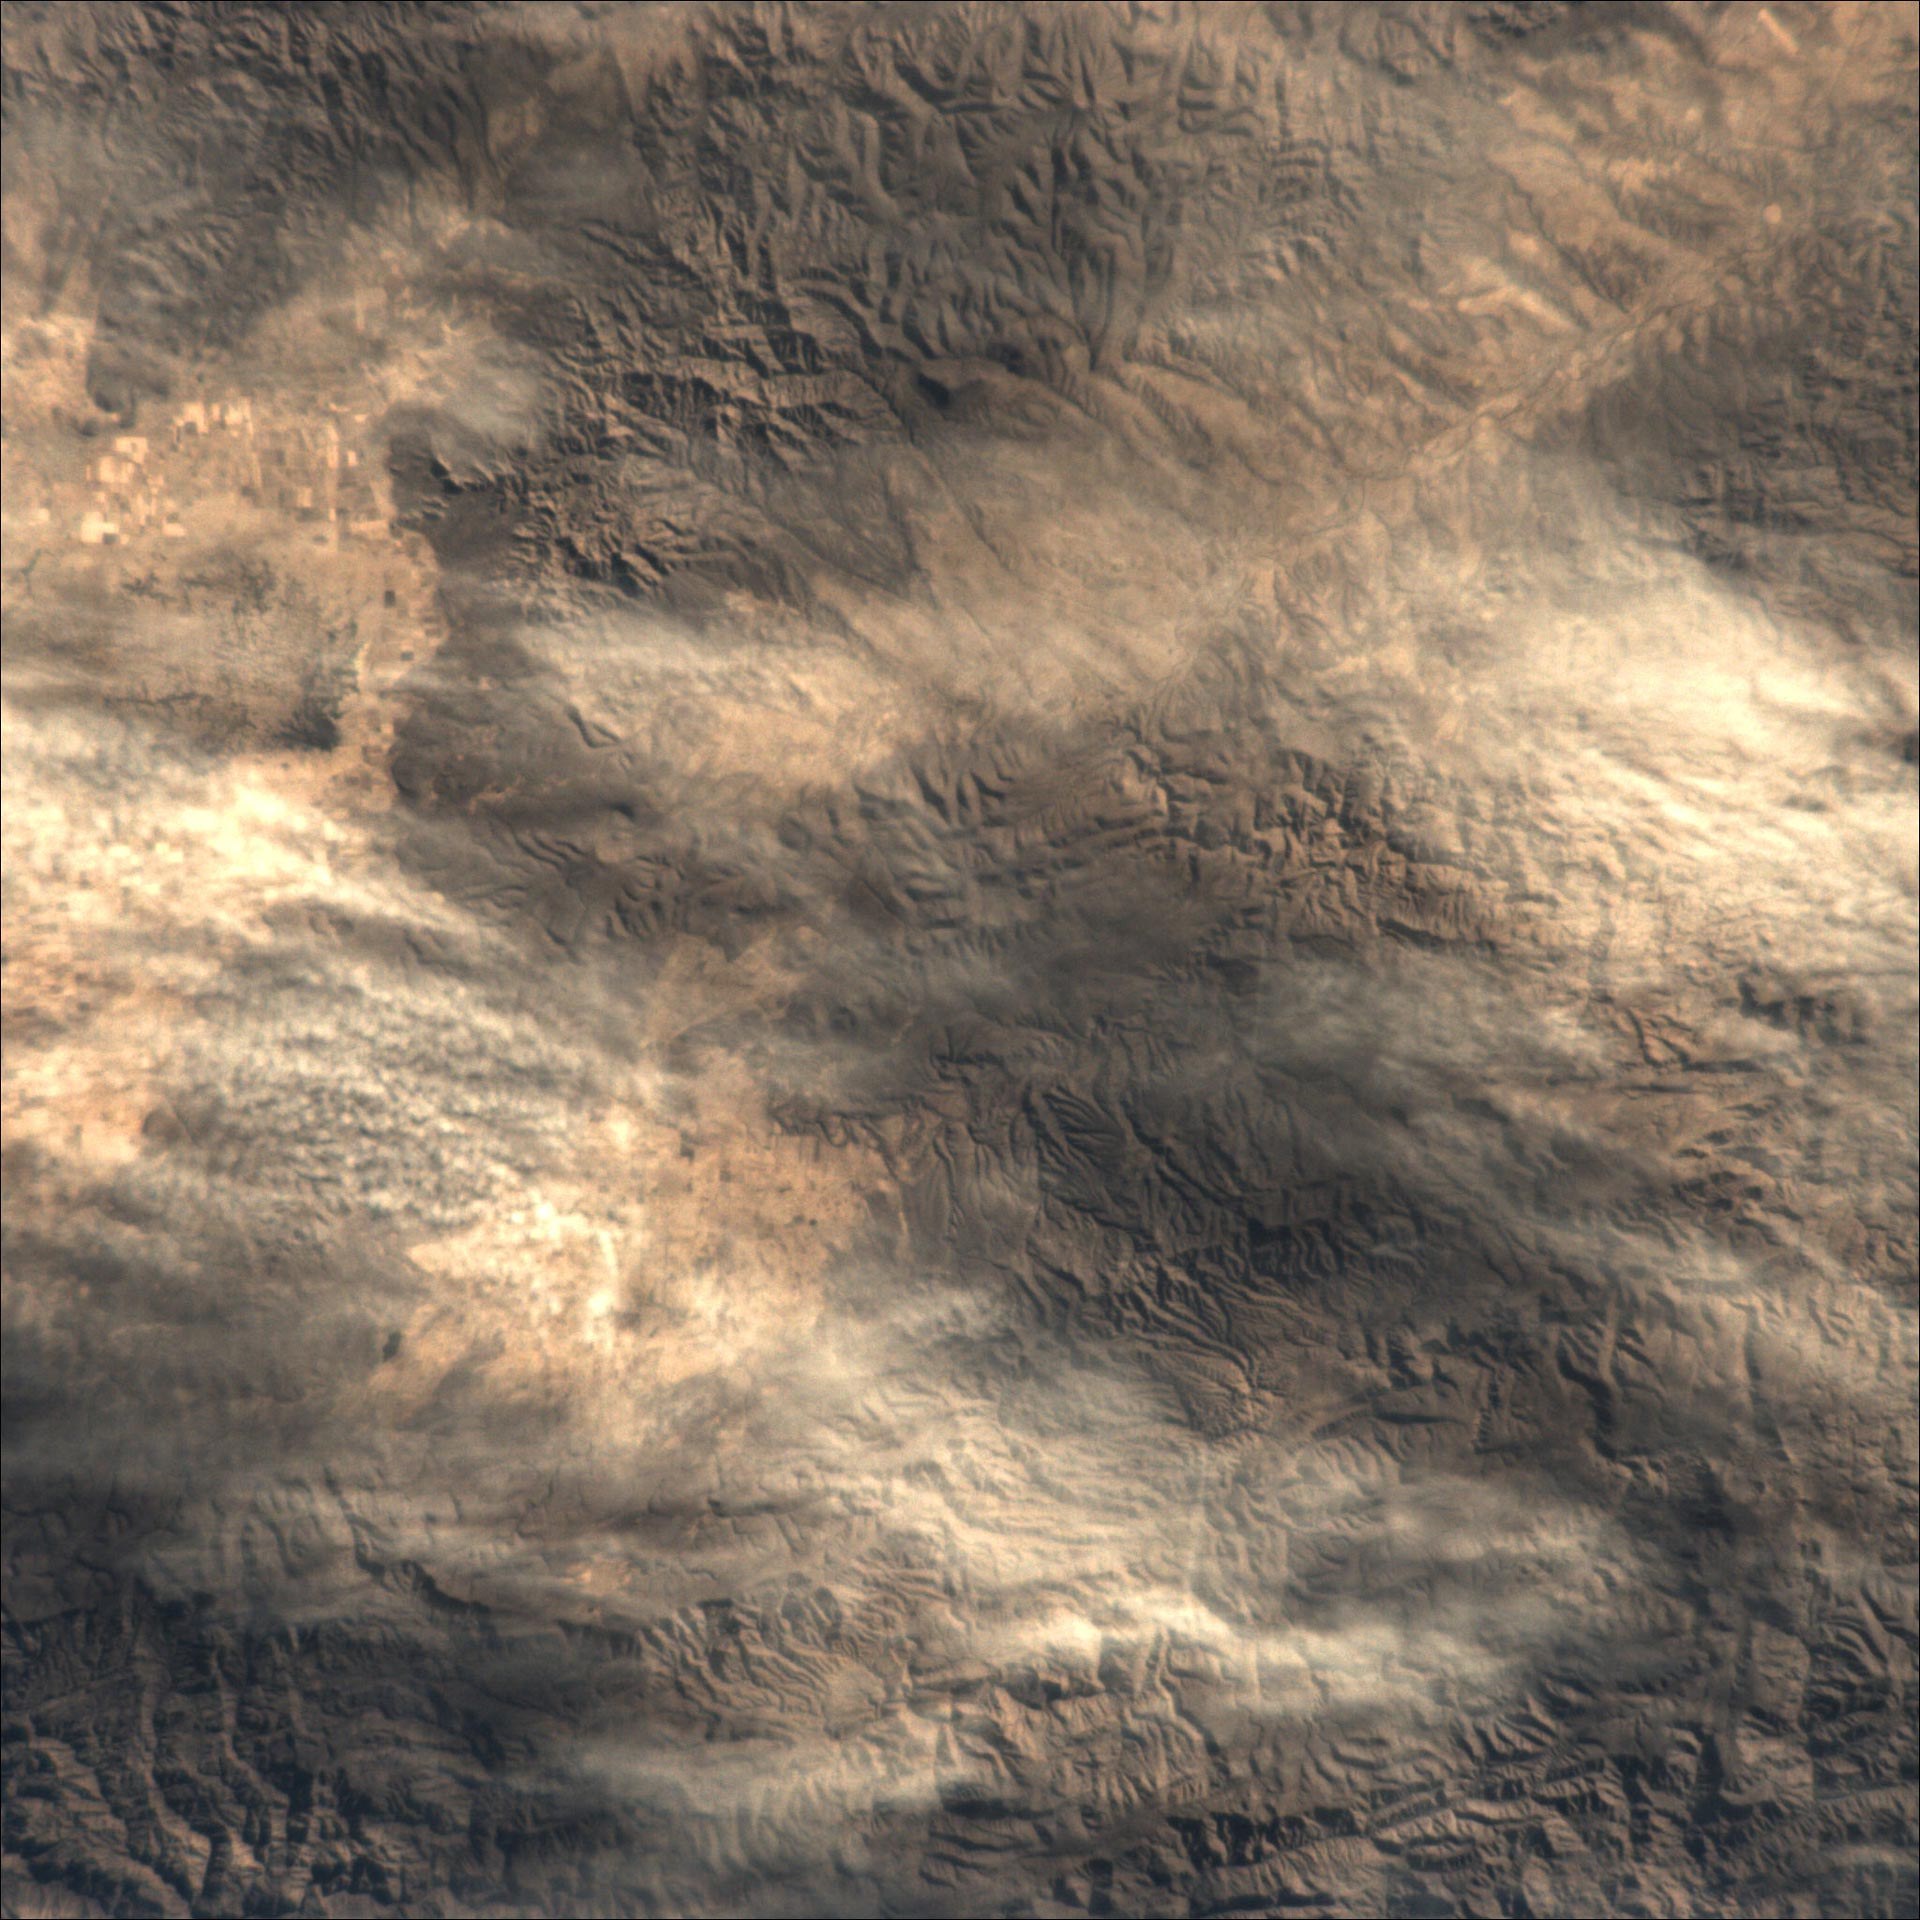 Satellitenbild von New Mexico, USA